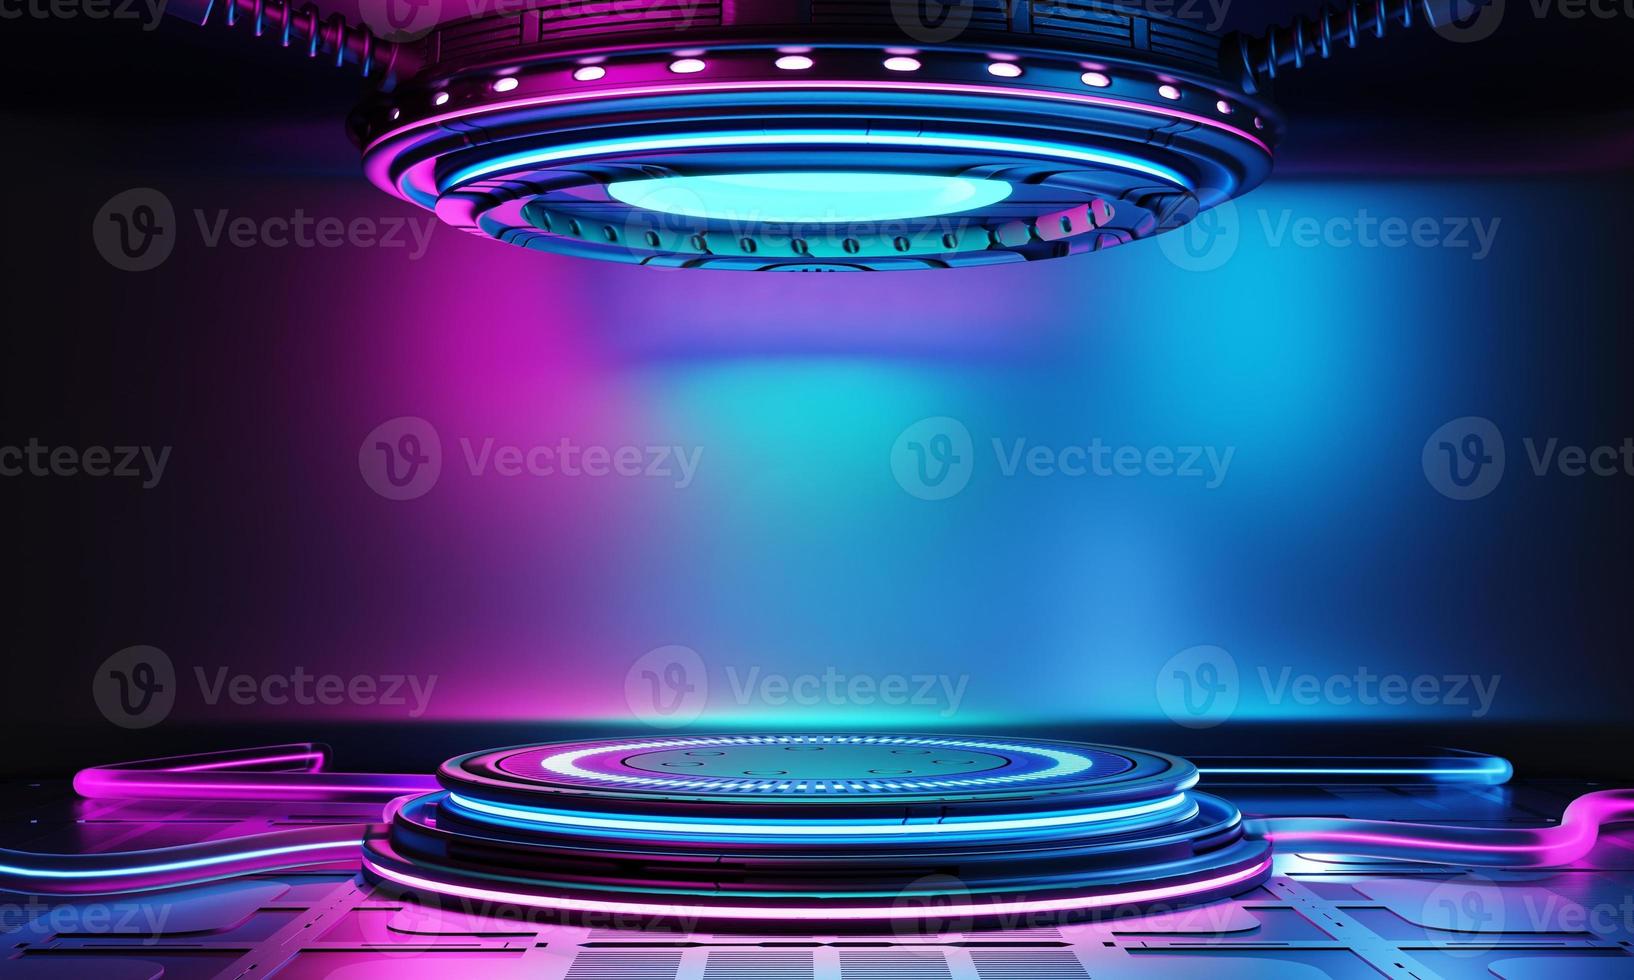 cyberpunk sci-fi product podium showcase in lege ruimte met blauwe en roze achtergrond. technologie en entertainment object concept. 3D illustratie weergave foto